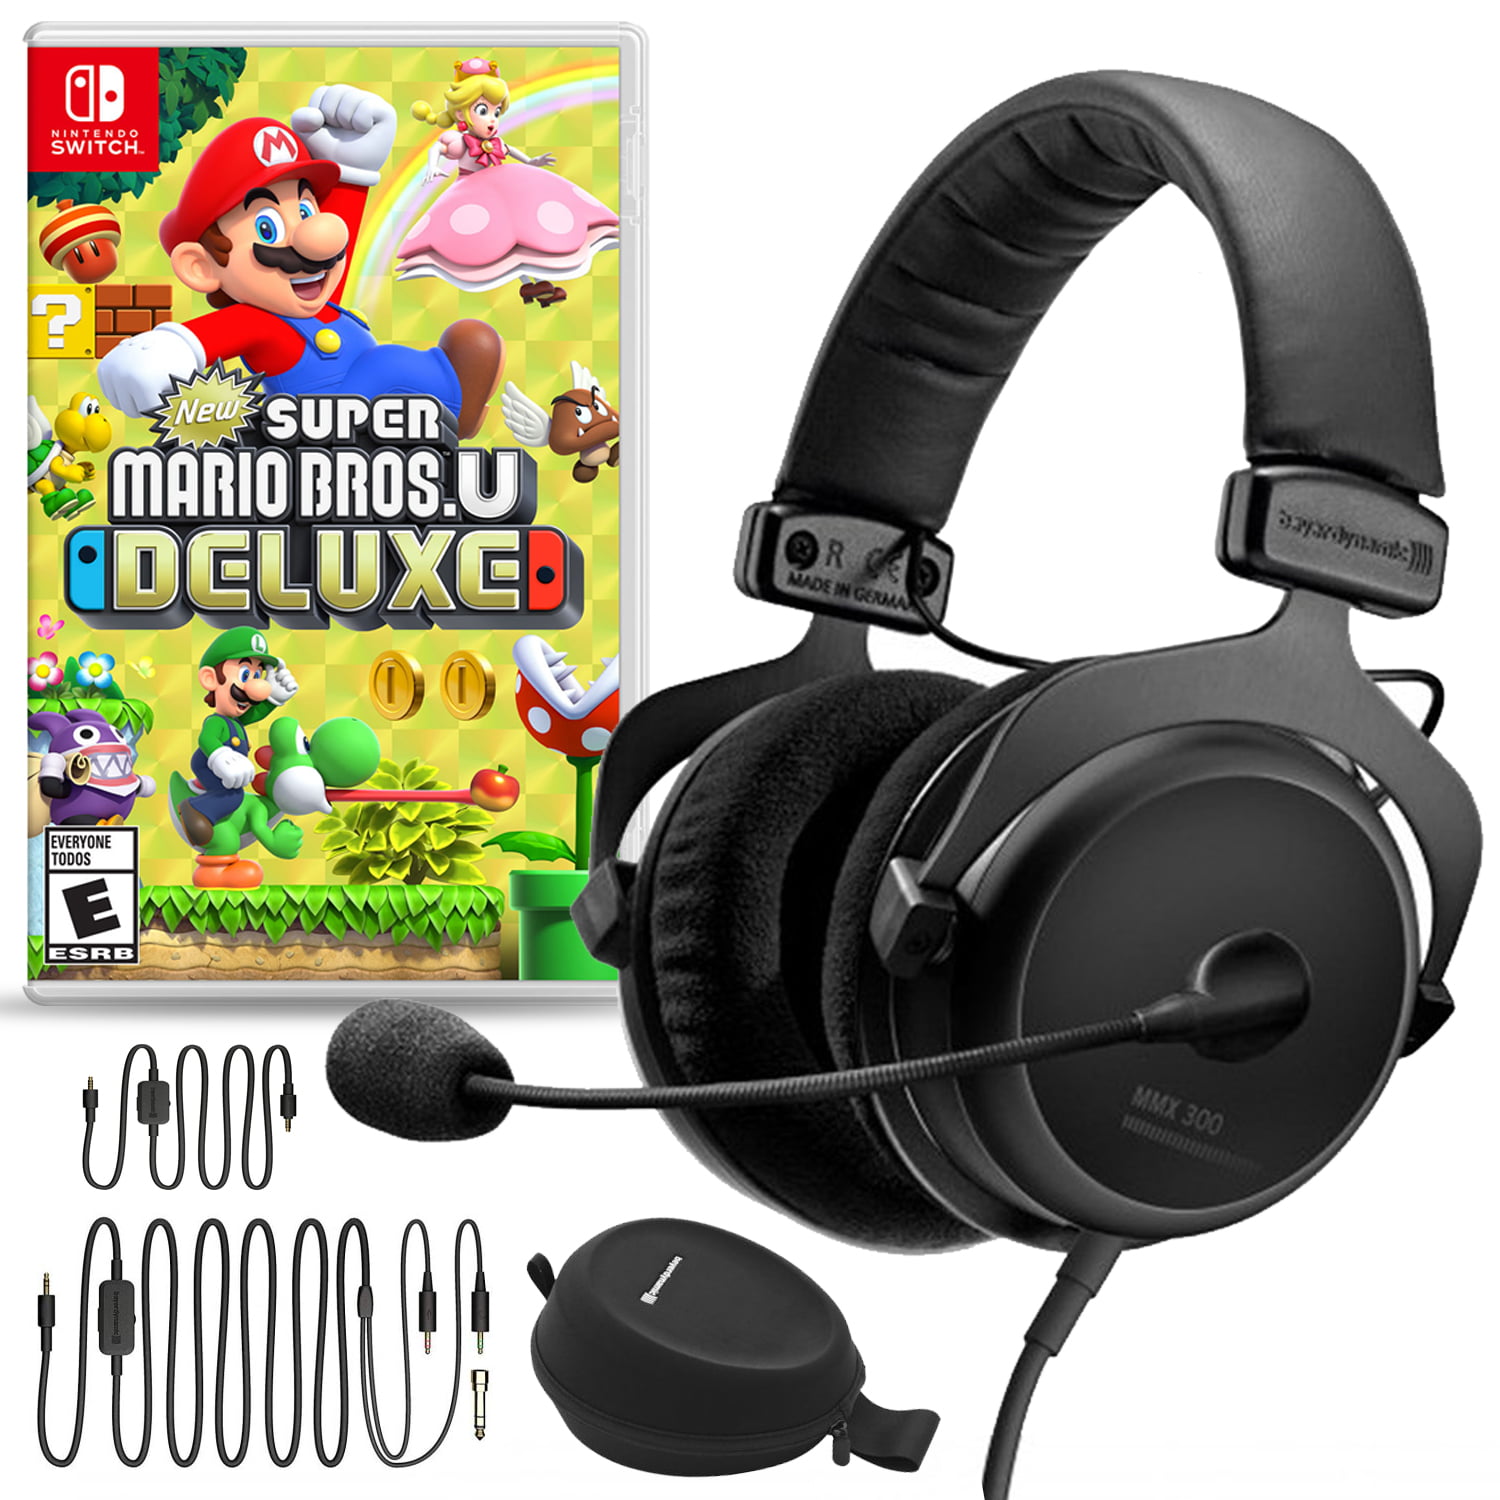 Beyerdynamic MMX 300 Premium Gaming Headset (2nd Gen) Bundle with New Super  Mario Bros. U Deluxe for Nintendo Switch